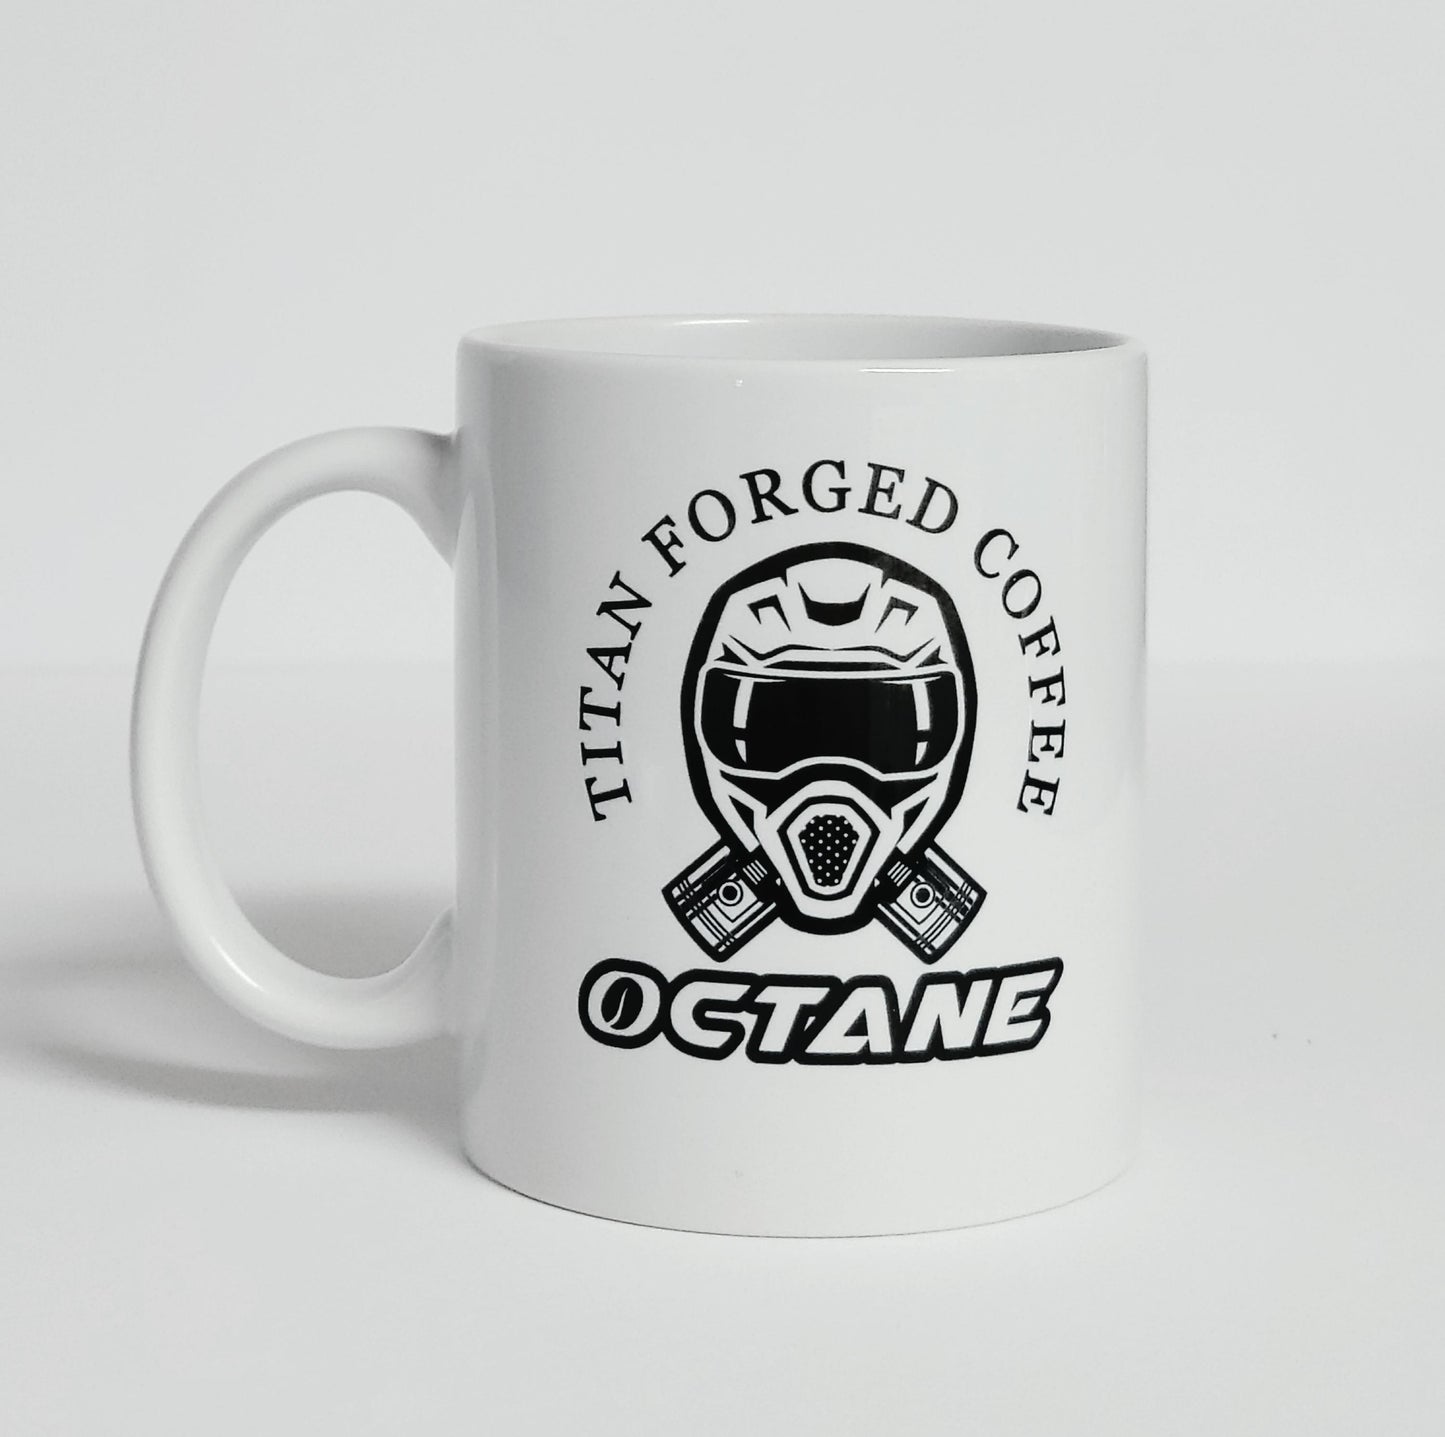 Octane Mug